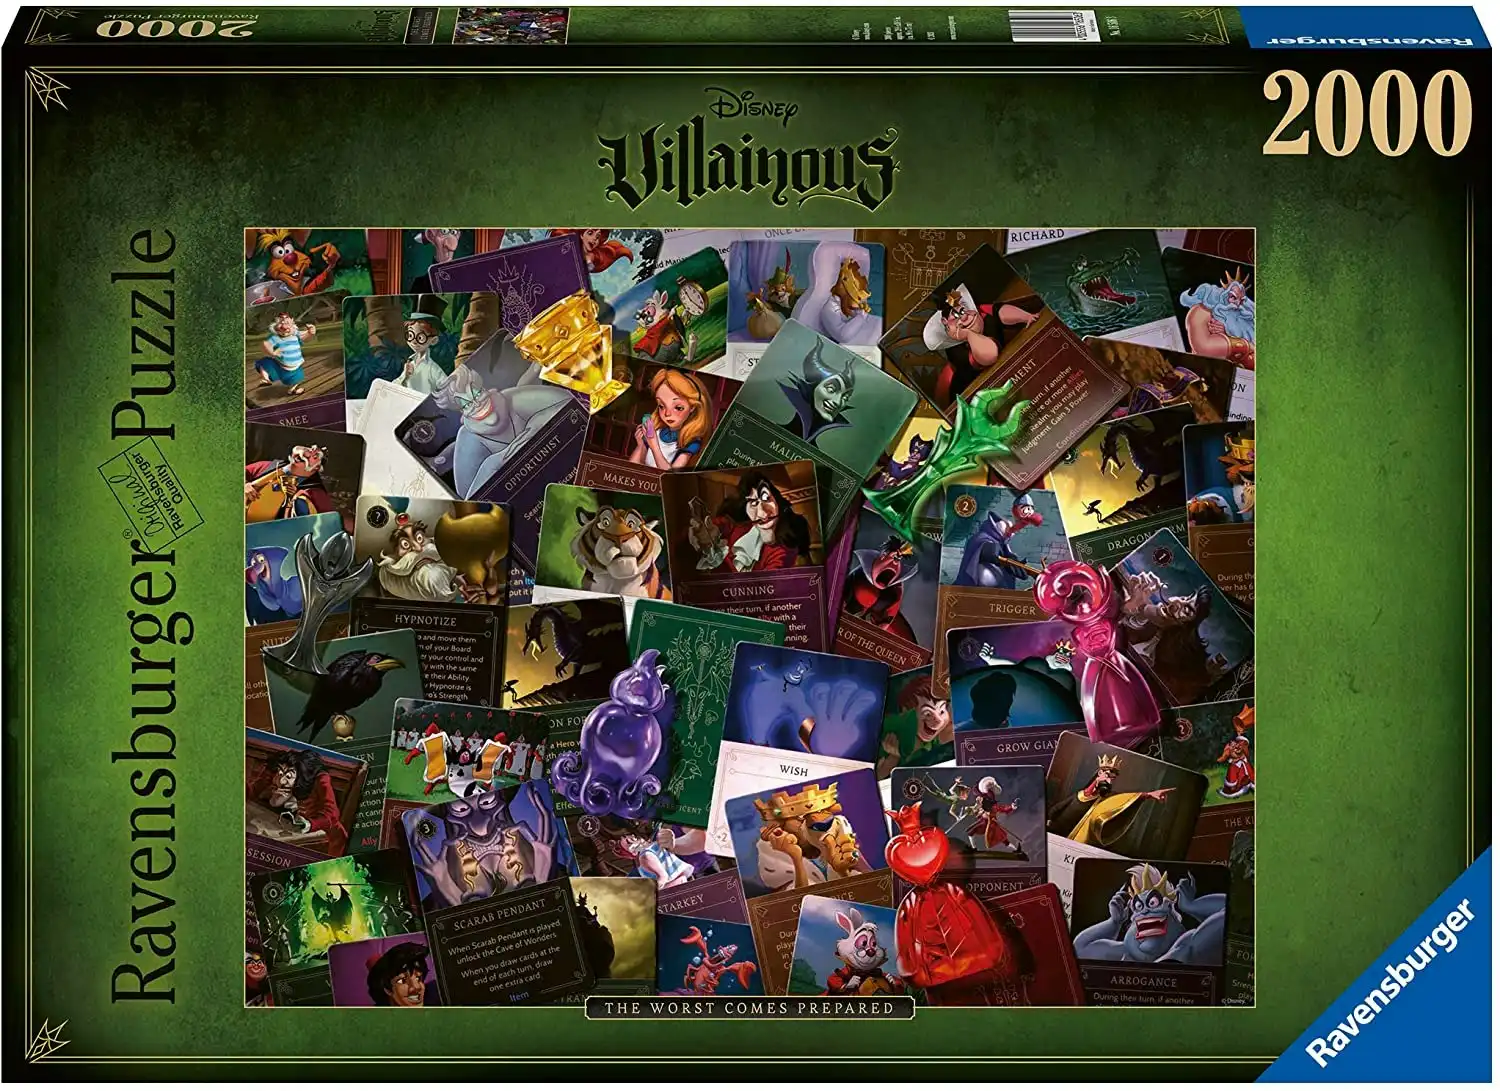 Ravensburger - The Worst Comes Prepared Villianous 2000 Pieces Jigsaw Puzzle